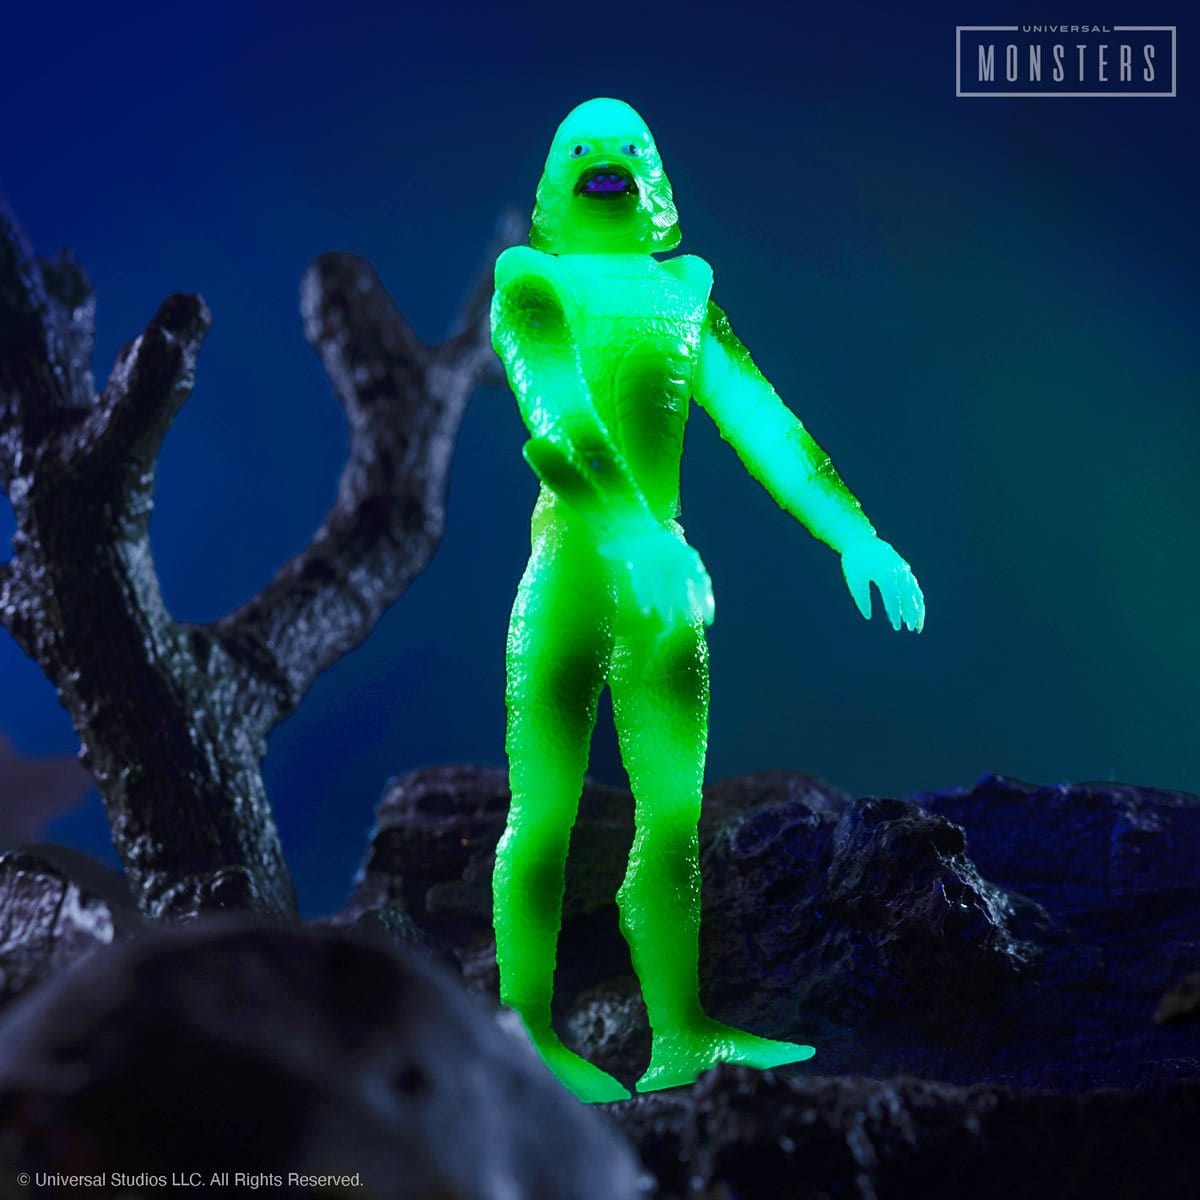 Creature from the Black Lagoon (Super She Creature) Glow-in-the-Dark ReAction Figure Exclusive - Pop-O-Loco - Super7